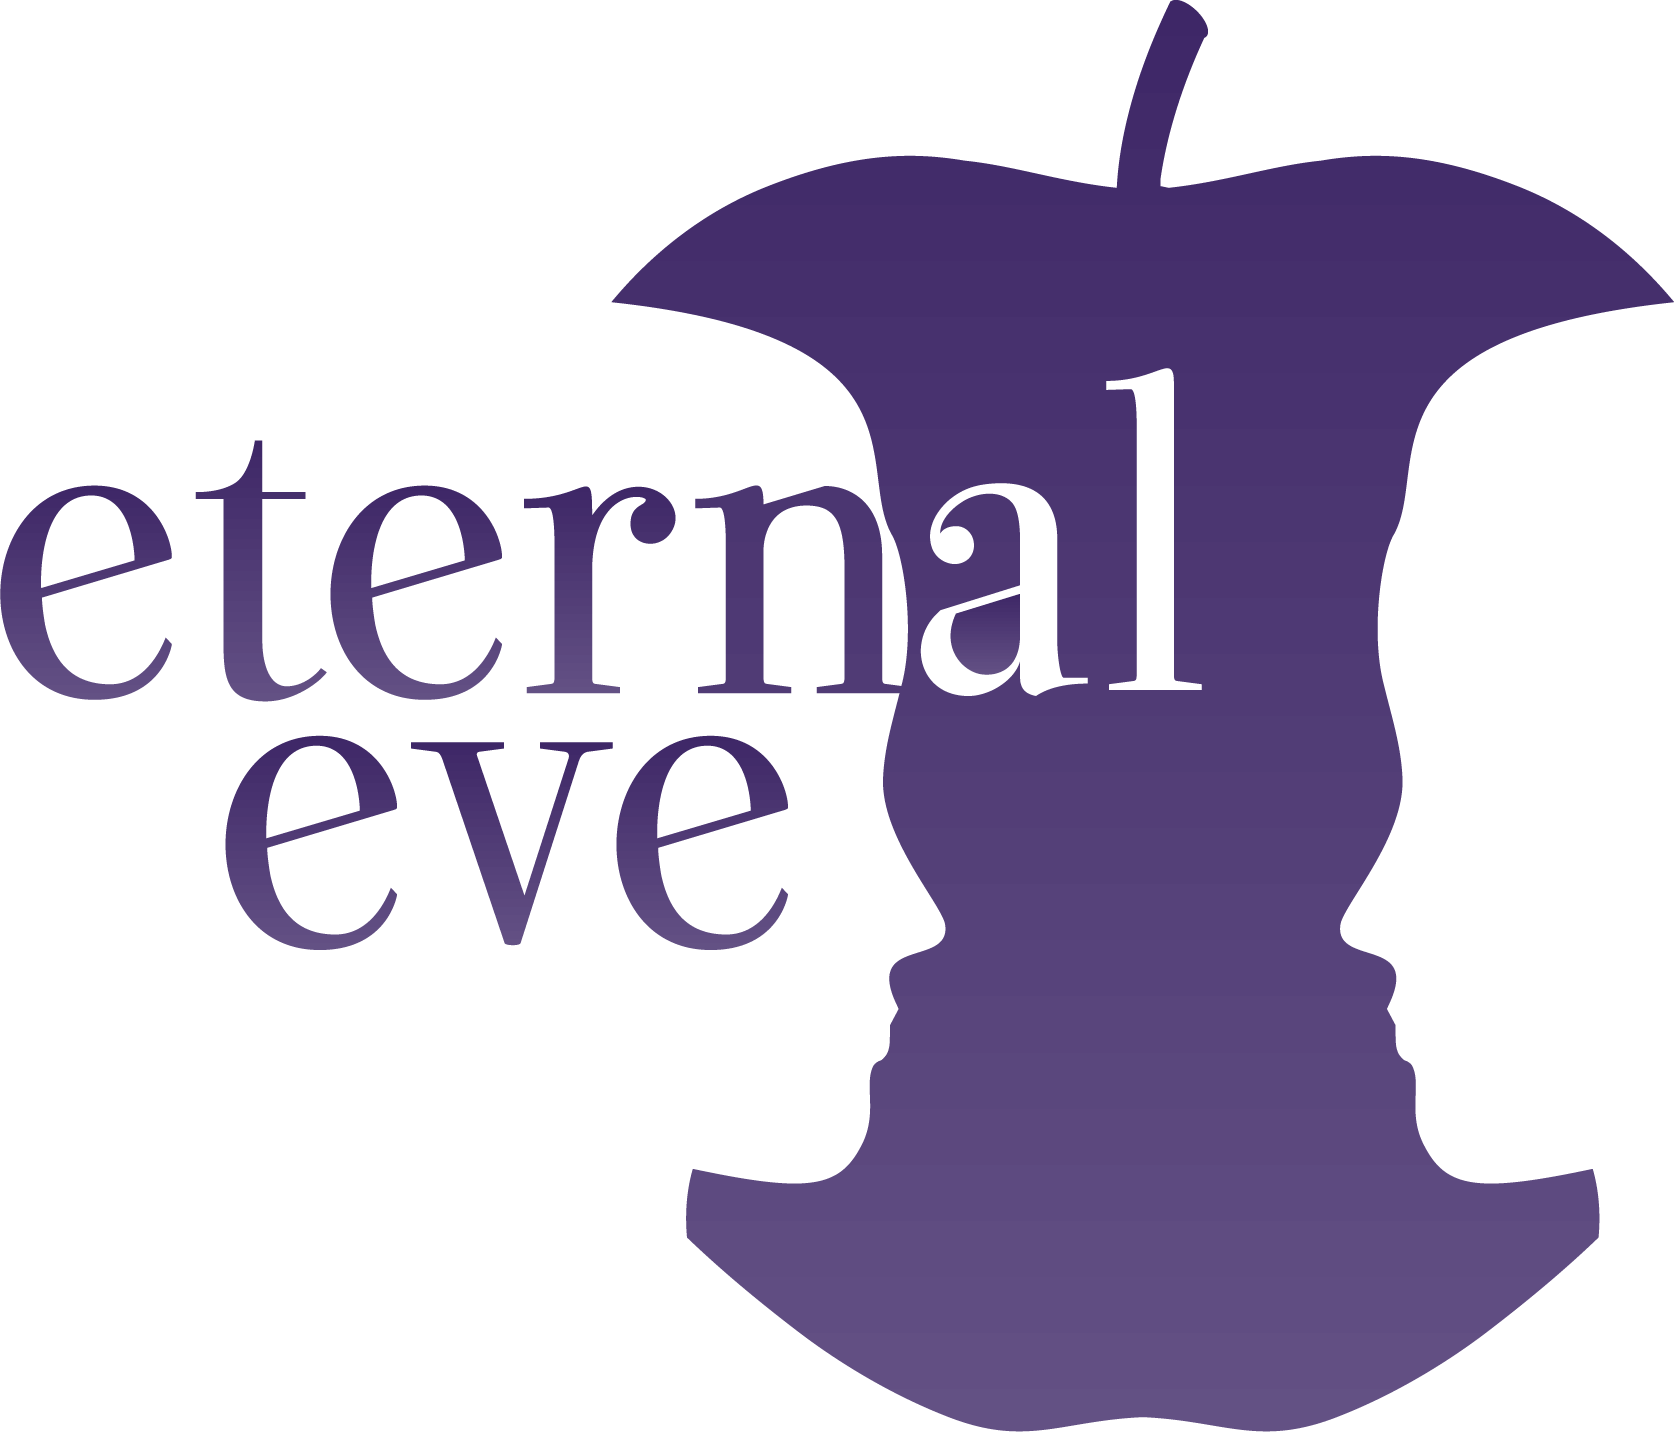 Eternal Eve